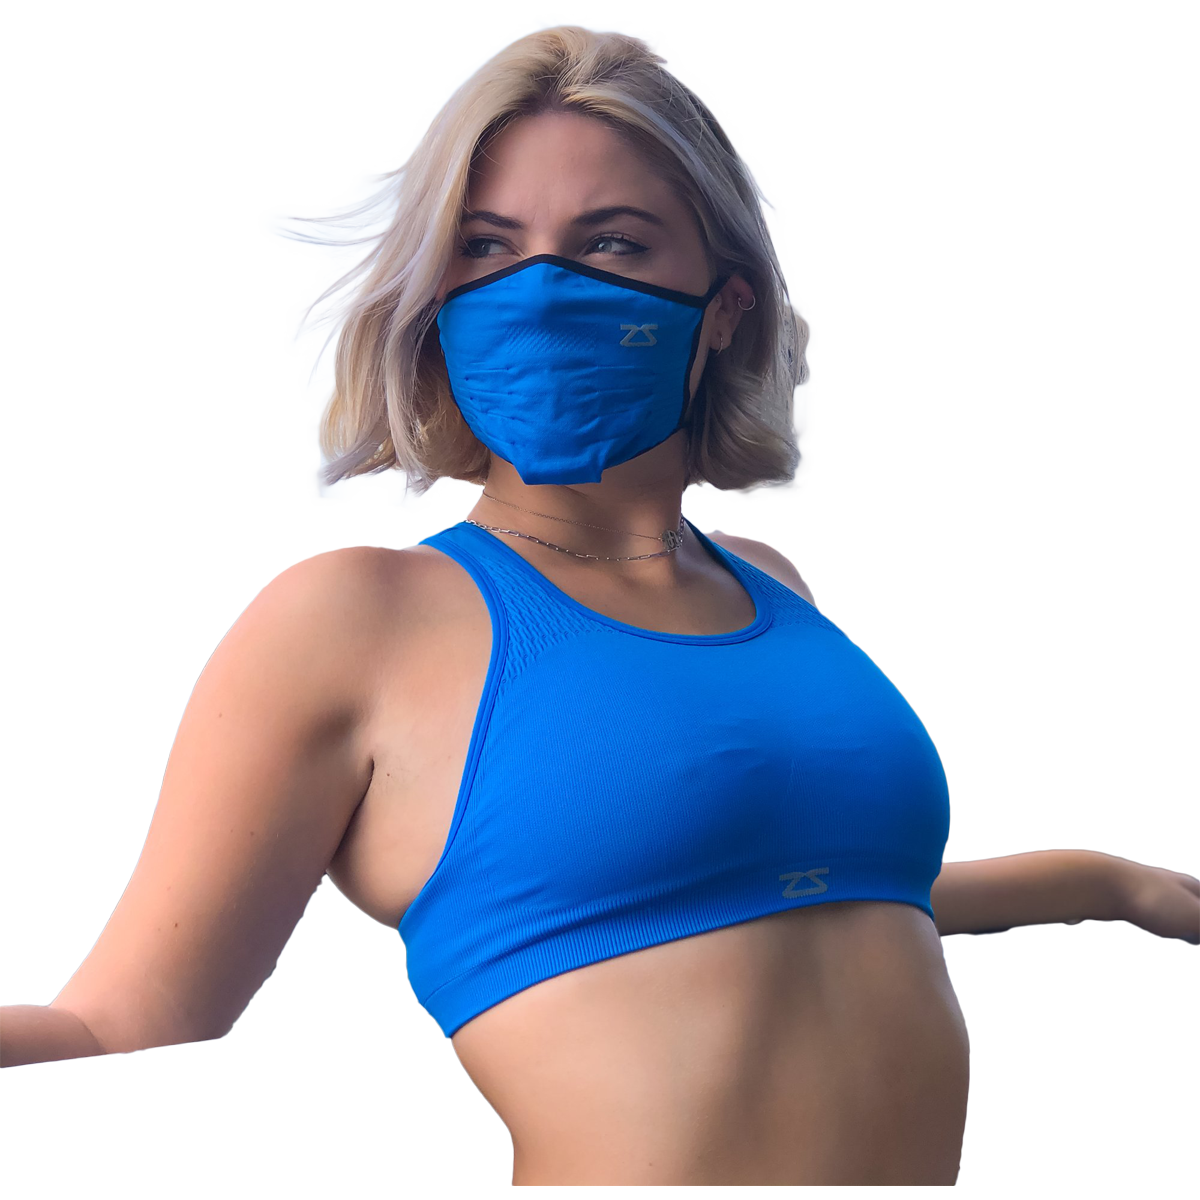 Zensah's seamless running sports bra